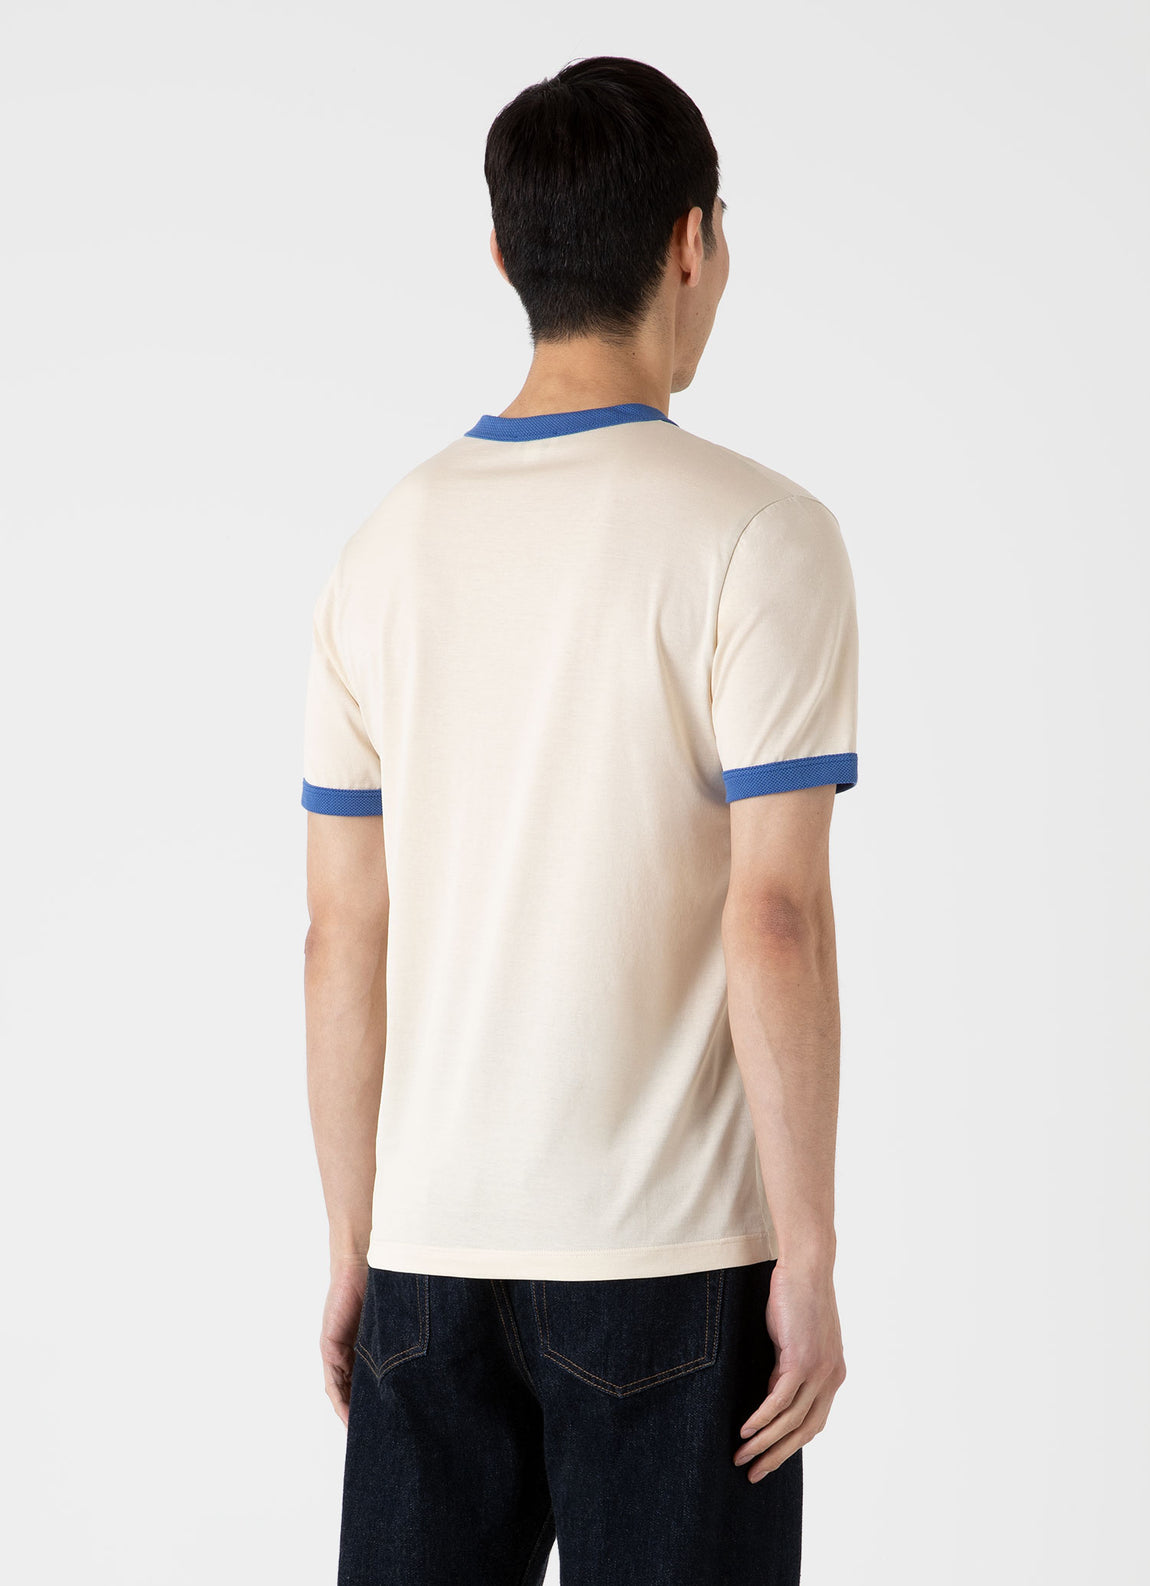 Men's Classic Ringer T-shirt in French Blue